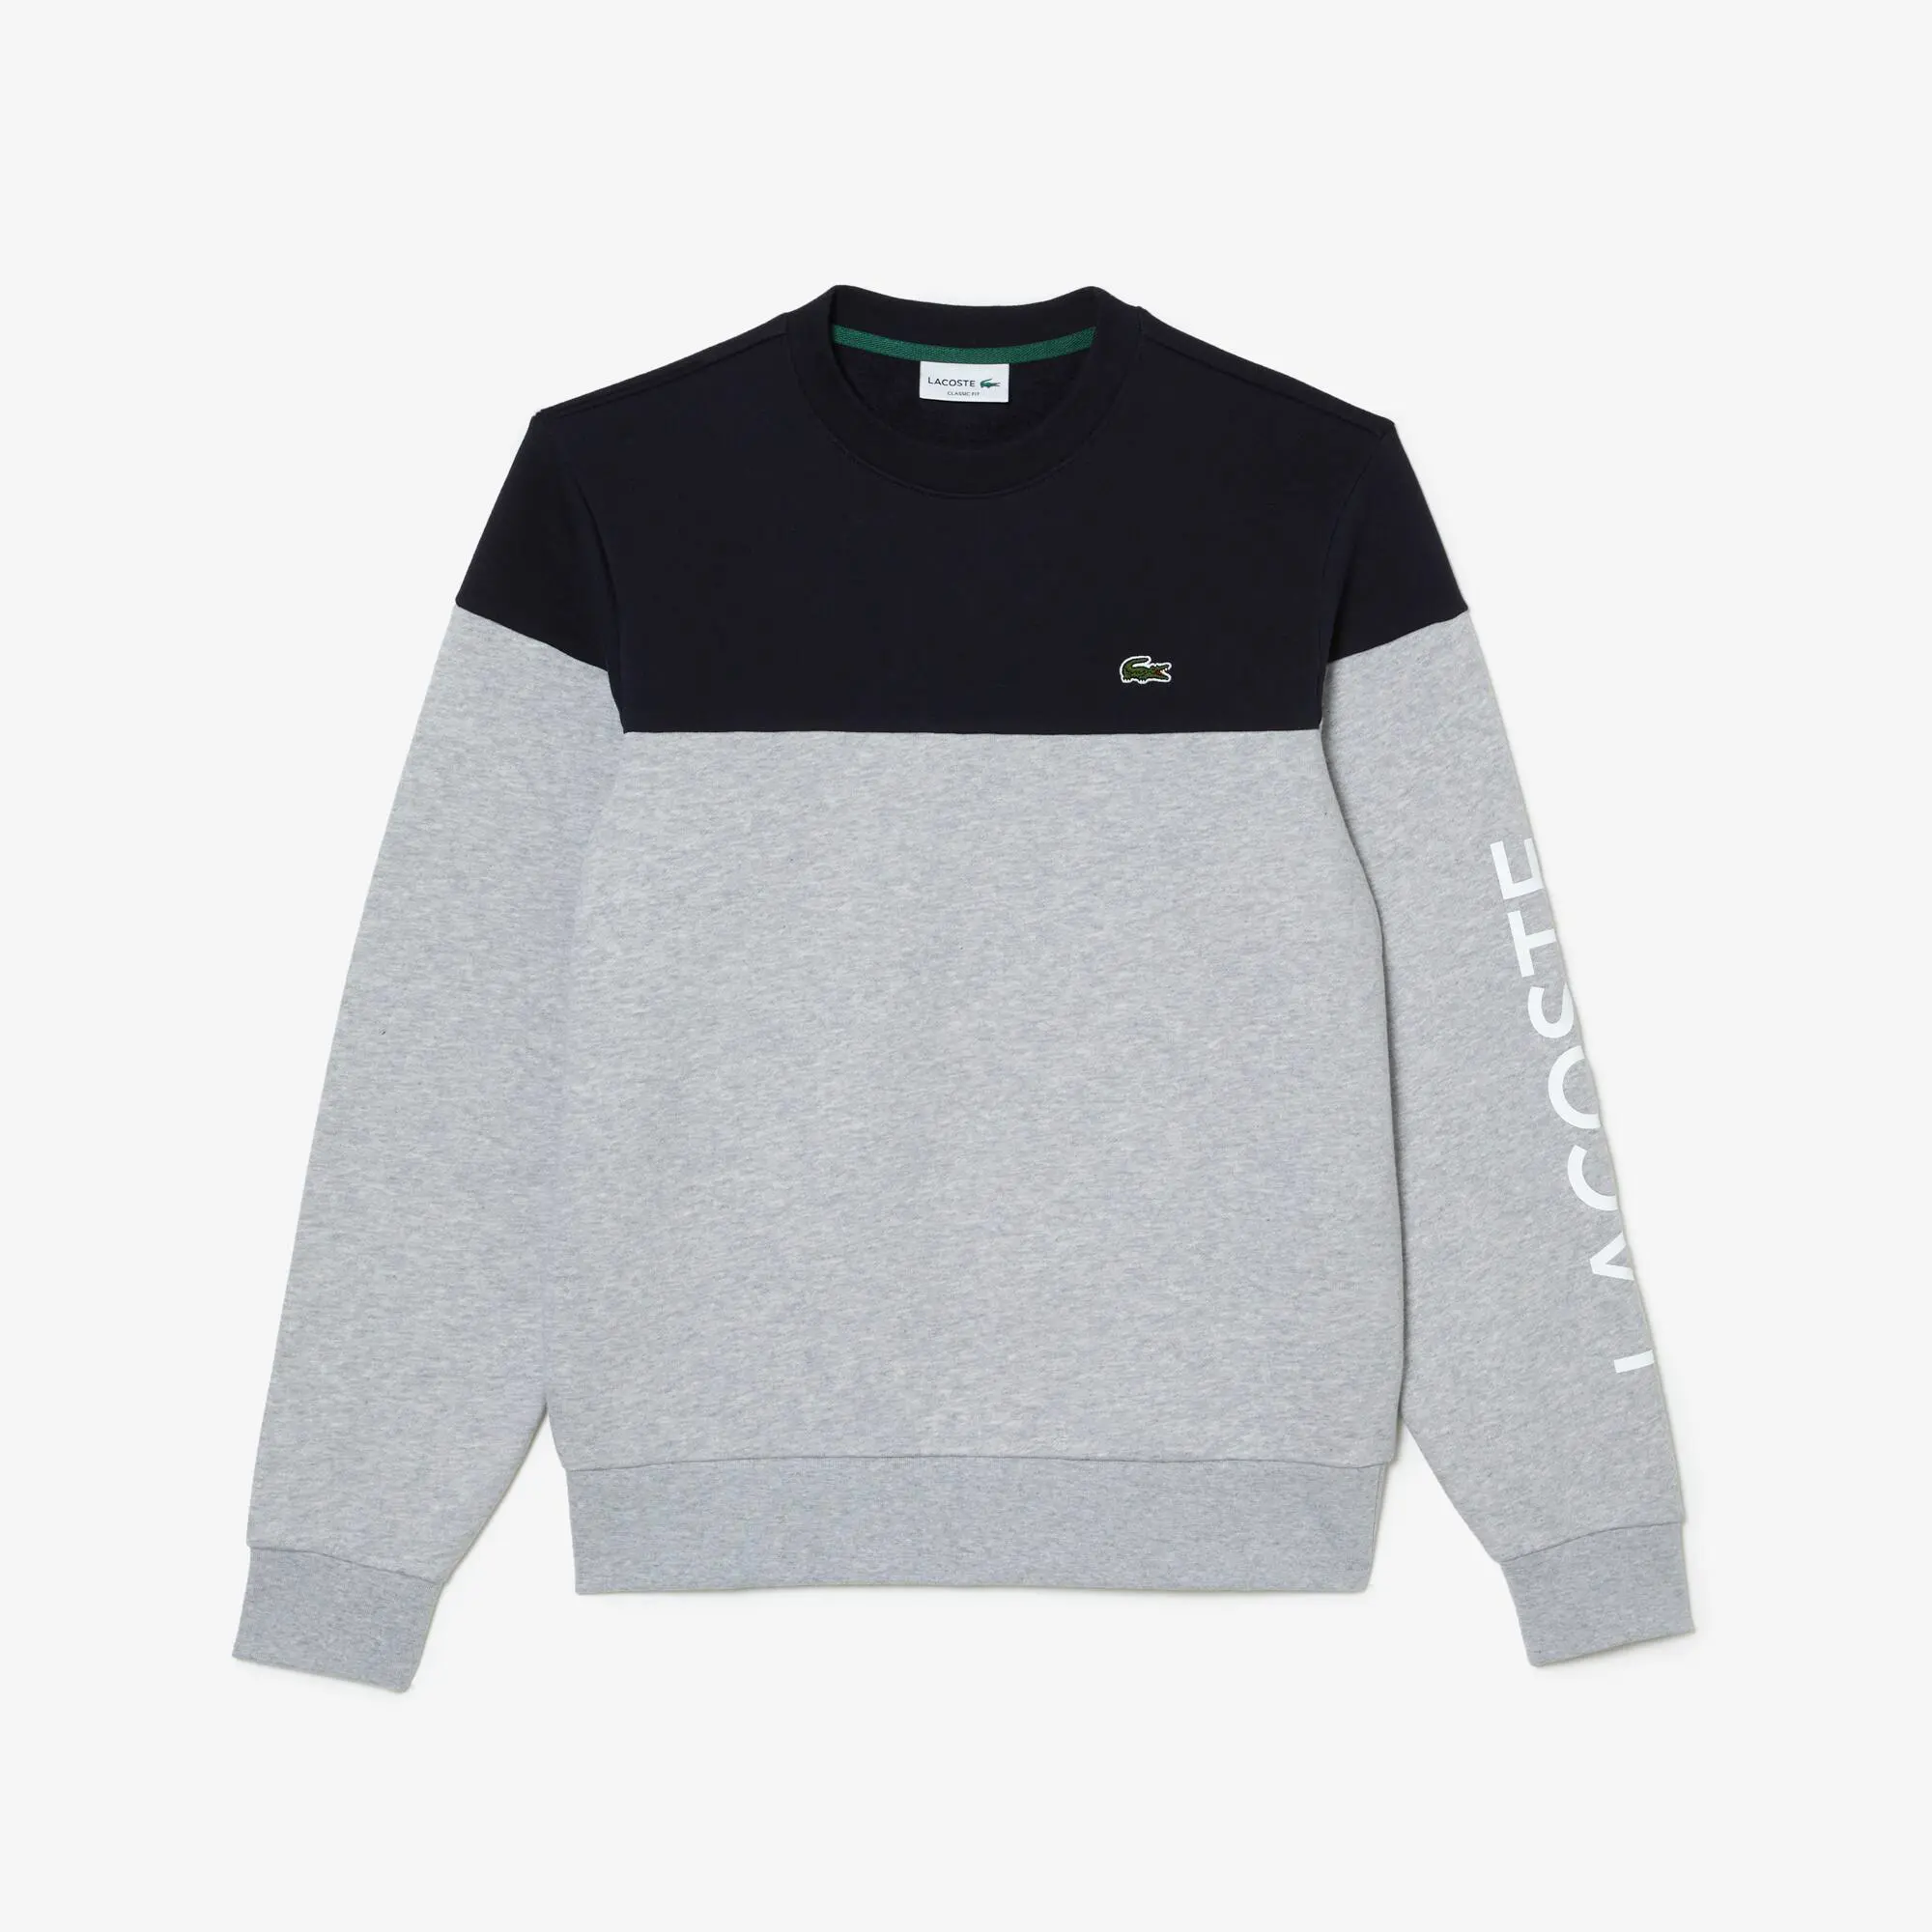 Lacoste Men’s Lacoste Classic Colourblock Branded Sweatshirt. 2